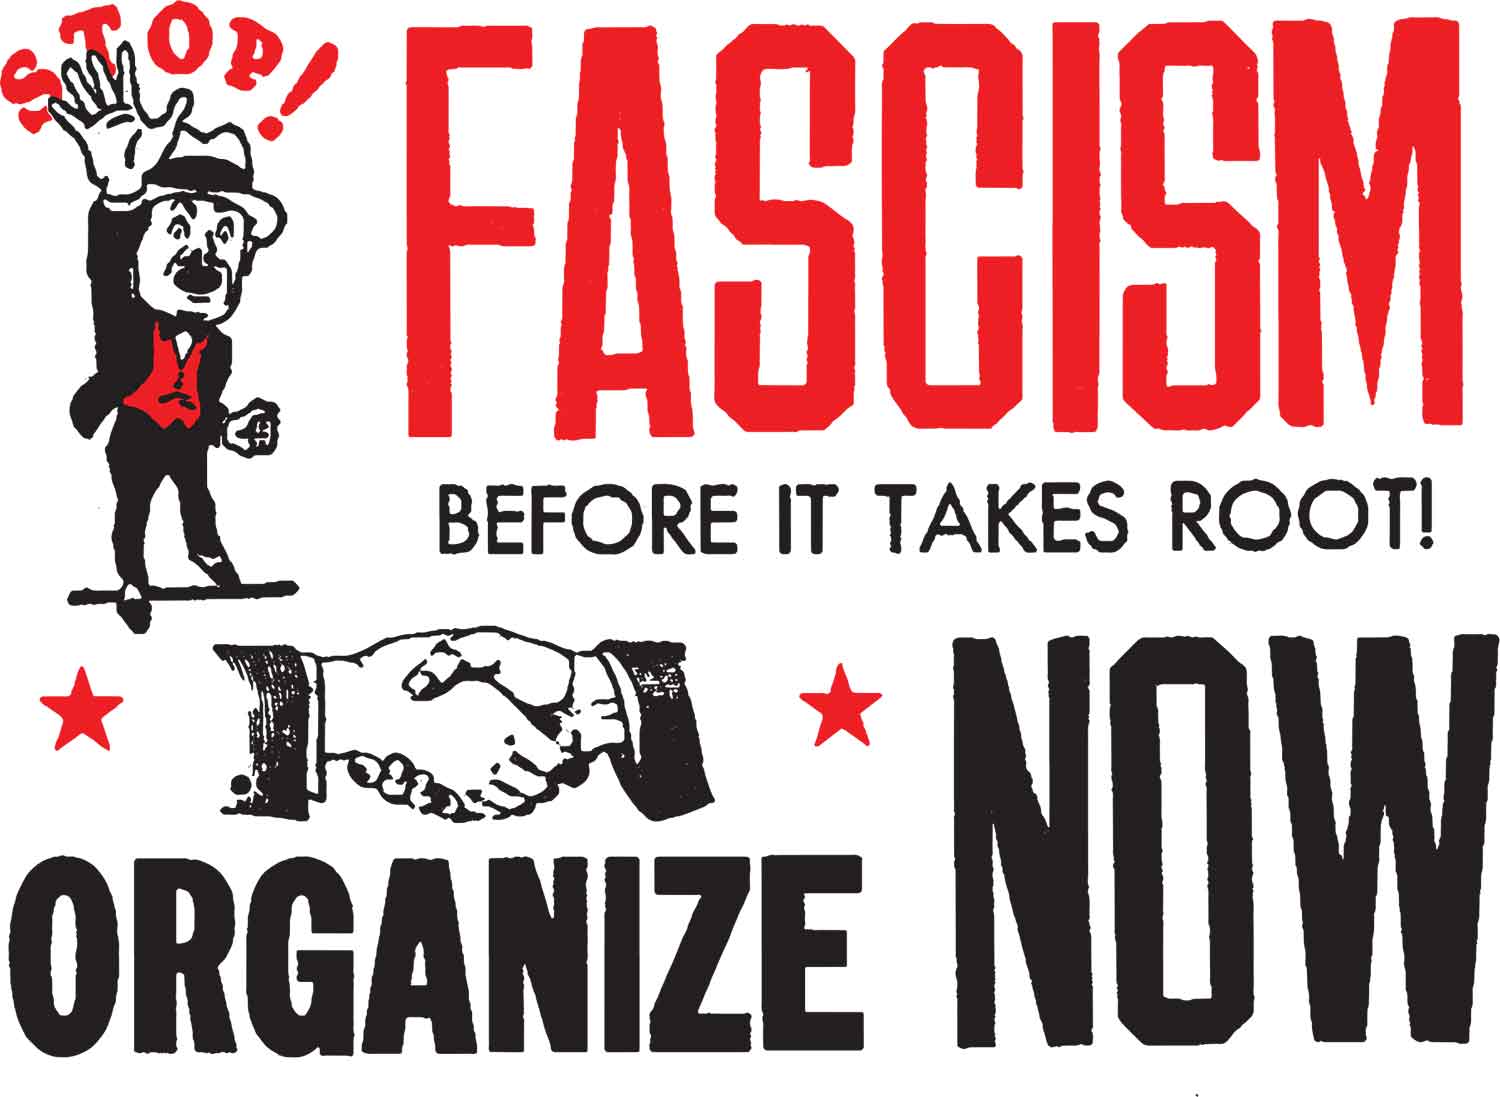 Justseeds | Stop Fascism